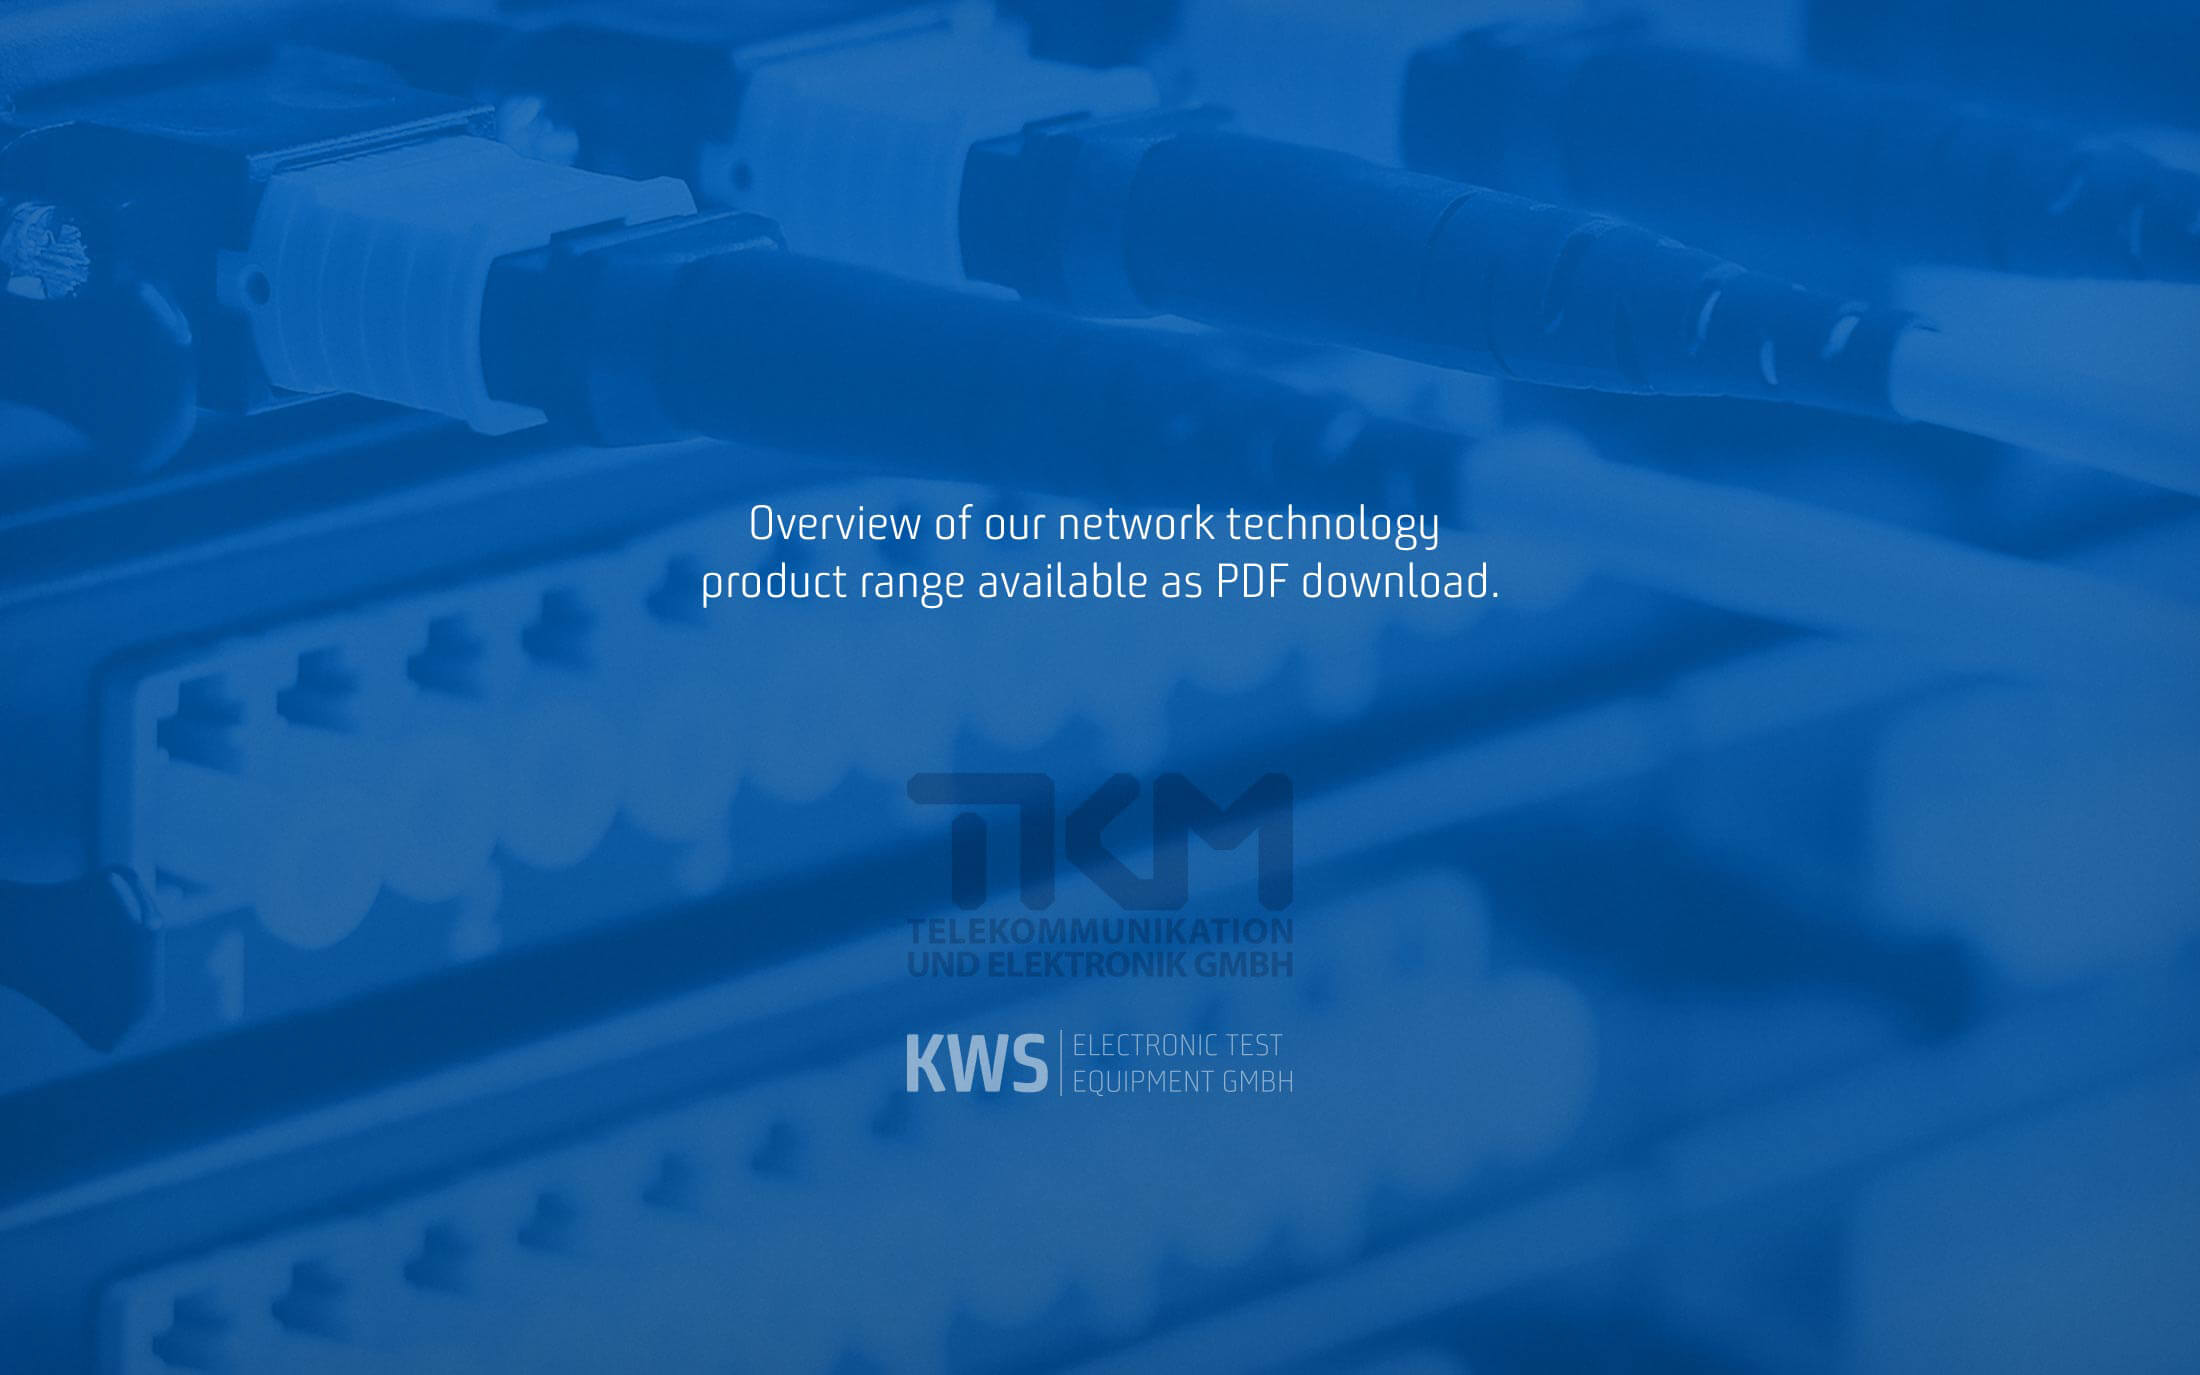 KWS Electronic News: TKM network technology as PDF